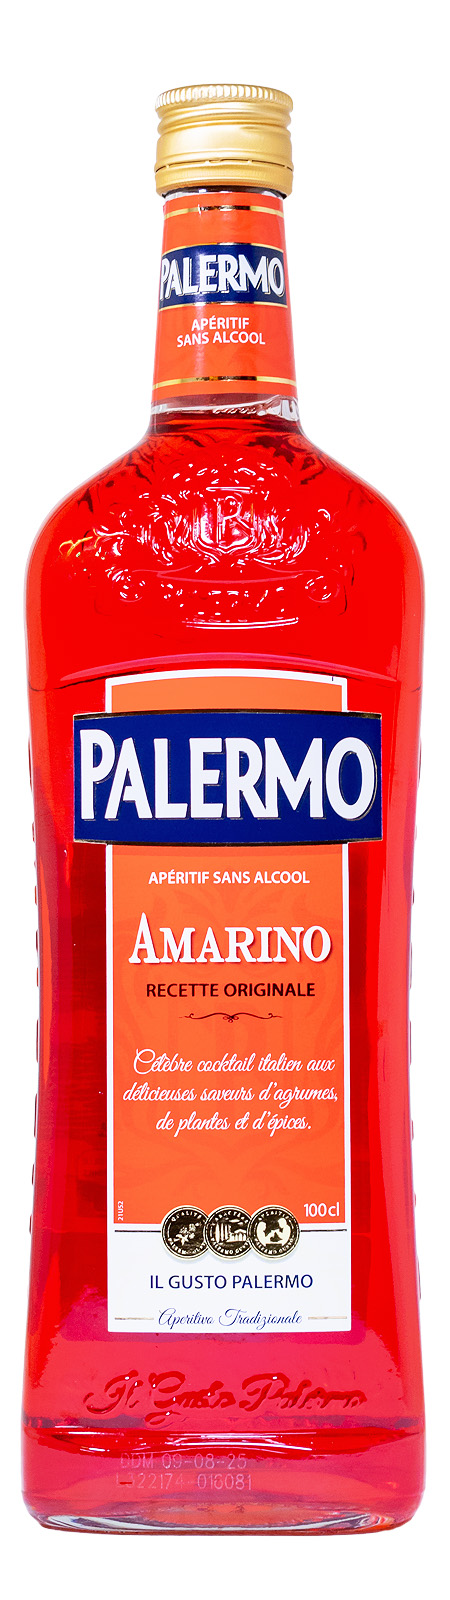 Palermo Amarino Aperitif ohne Alkohol - 1 Liter